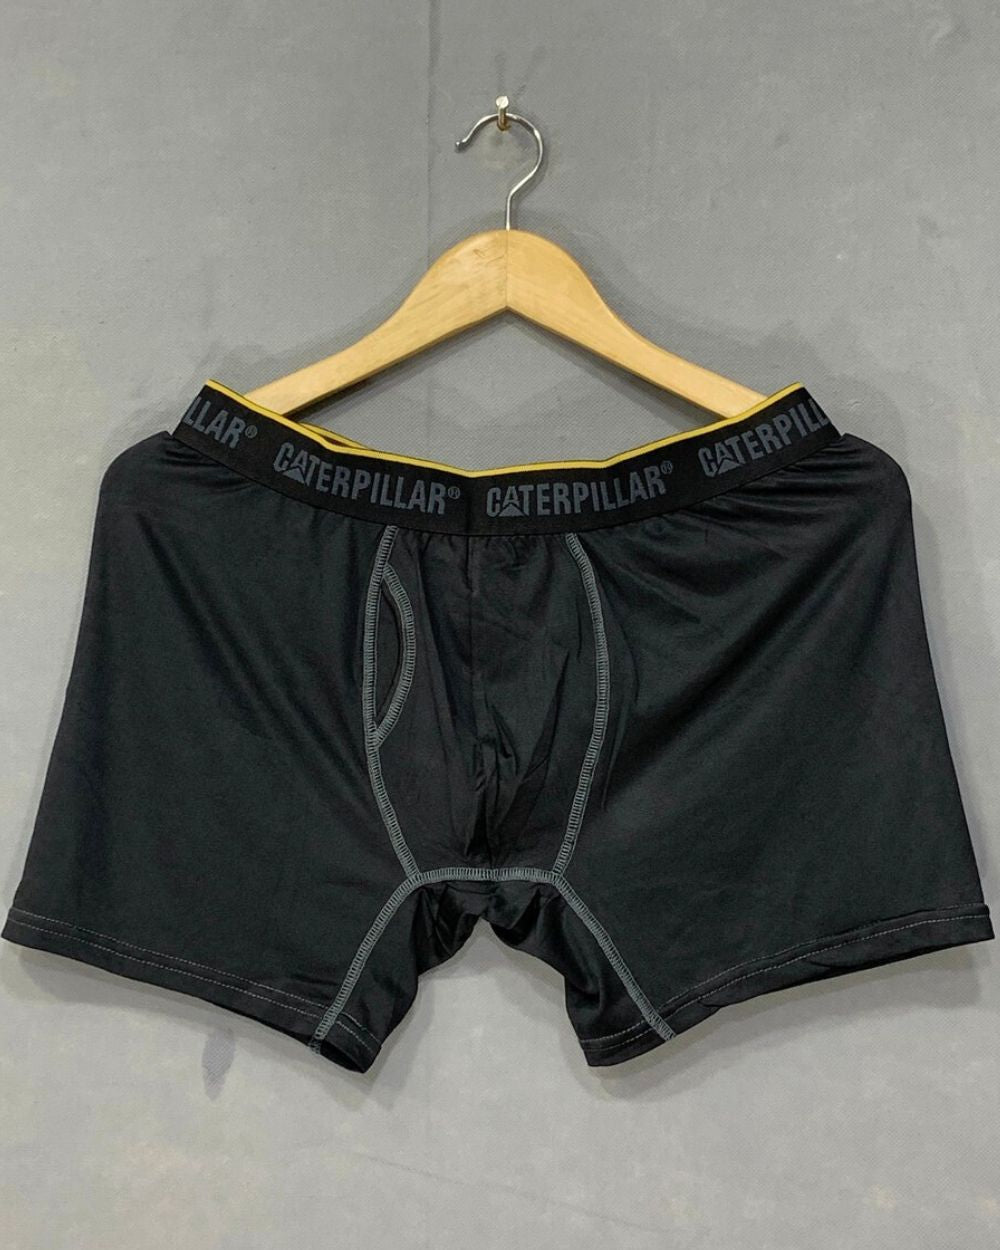 Caterpillar Original Branded Boxer Underwear For Men